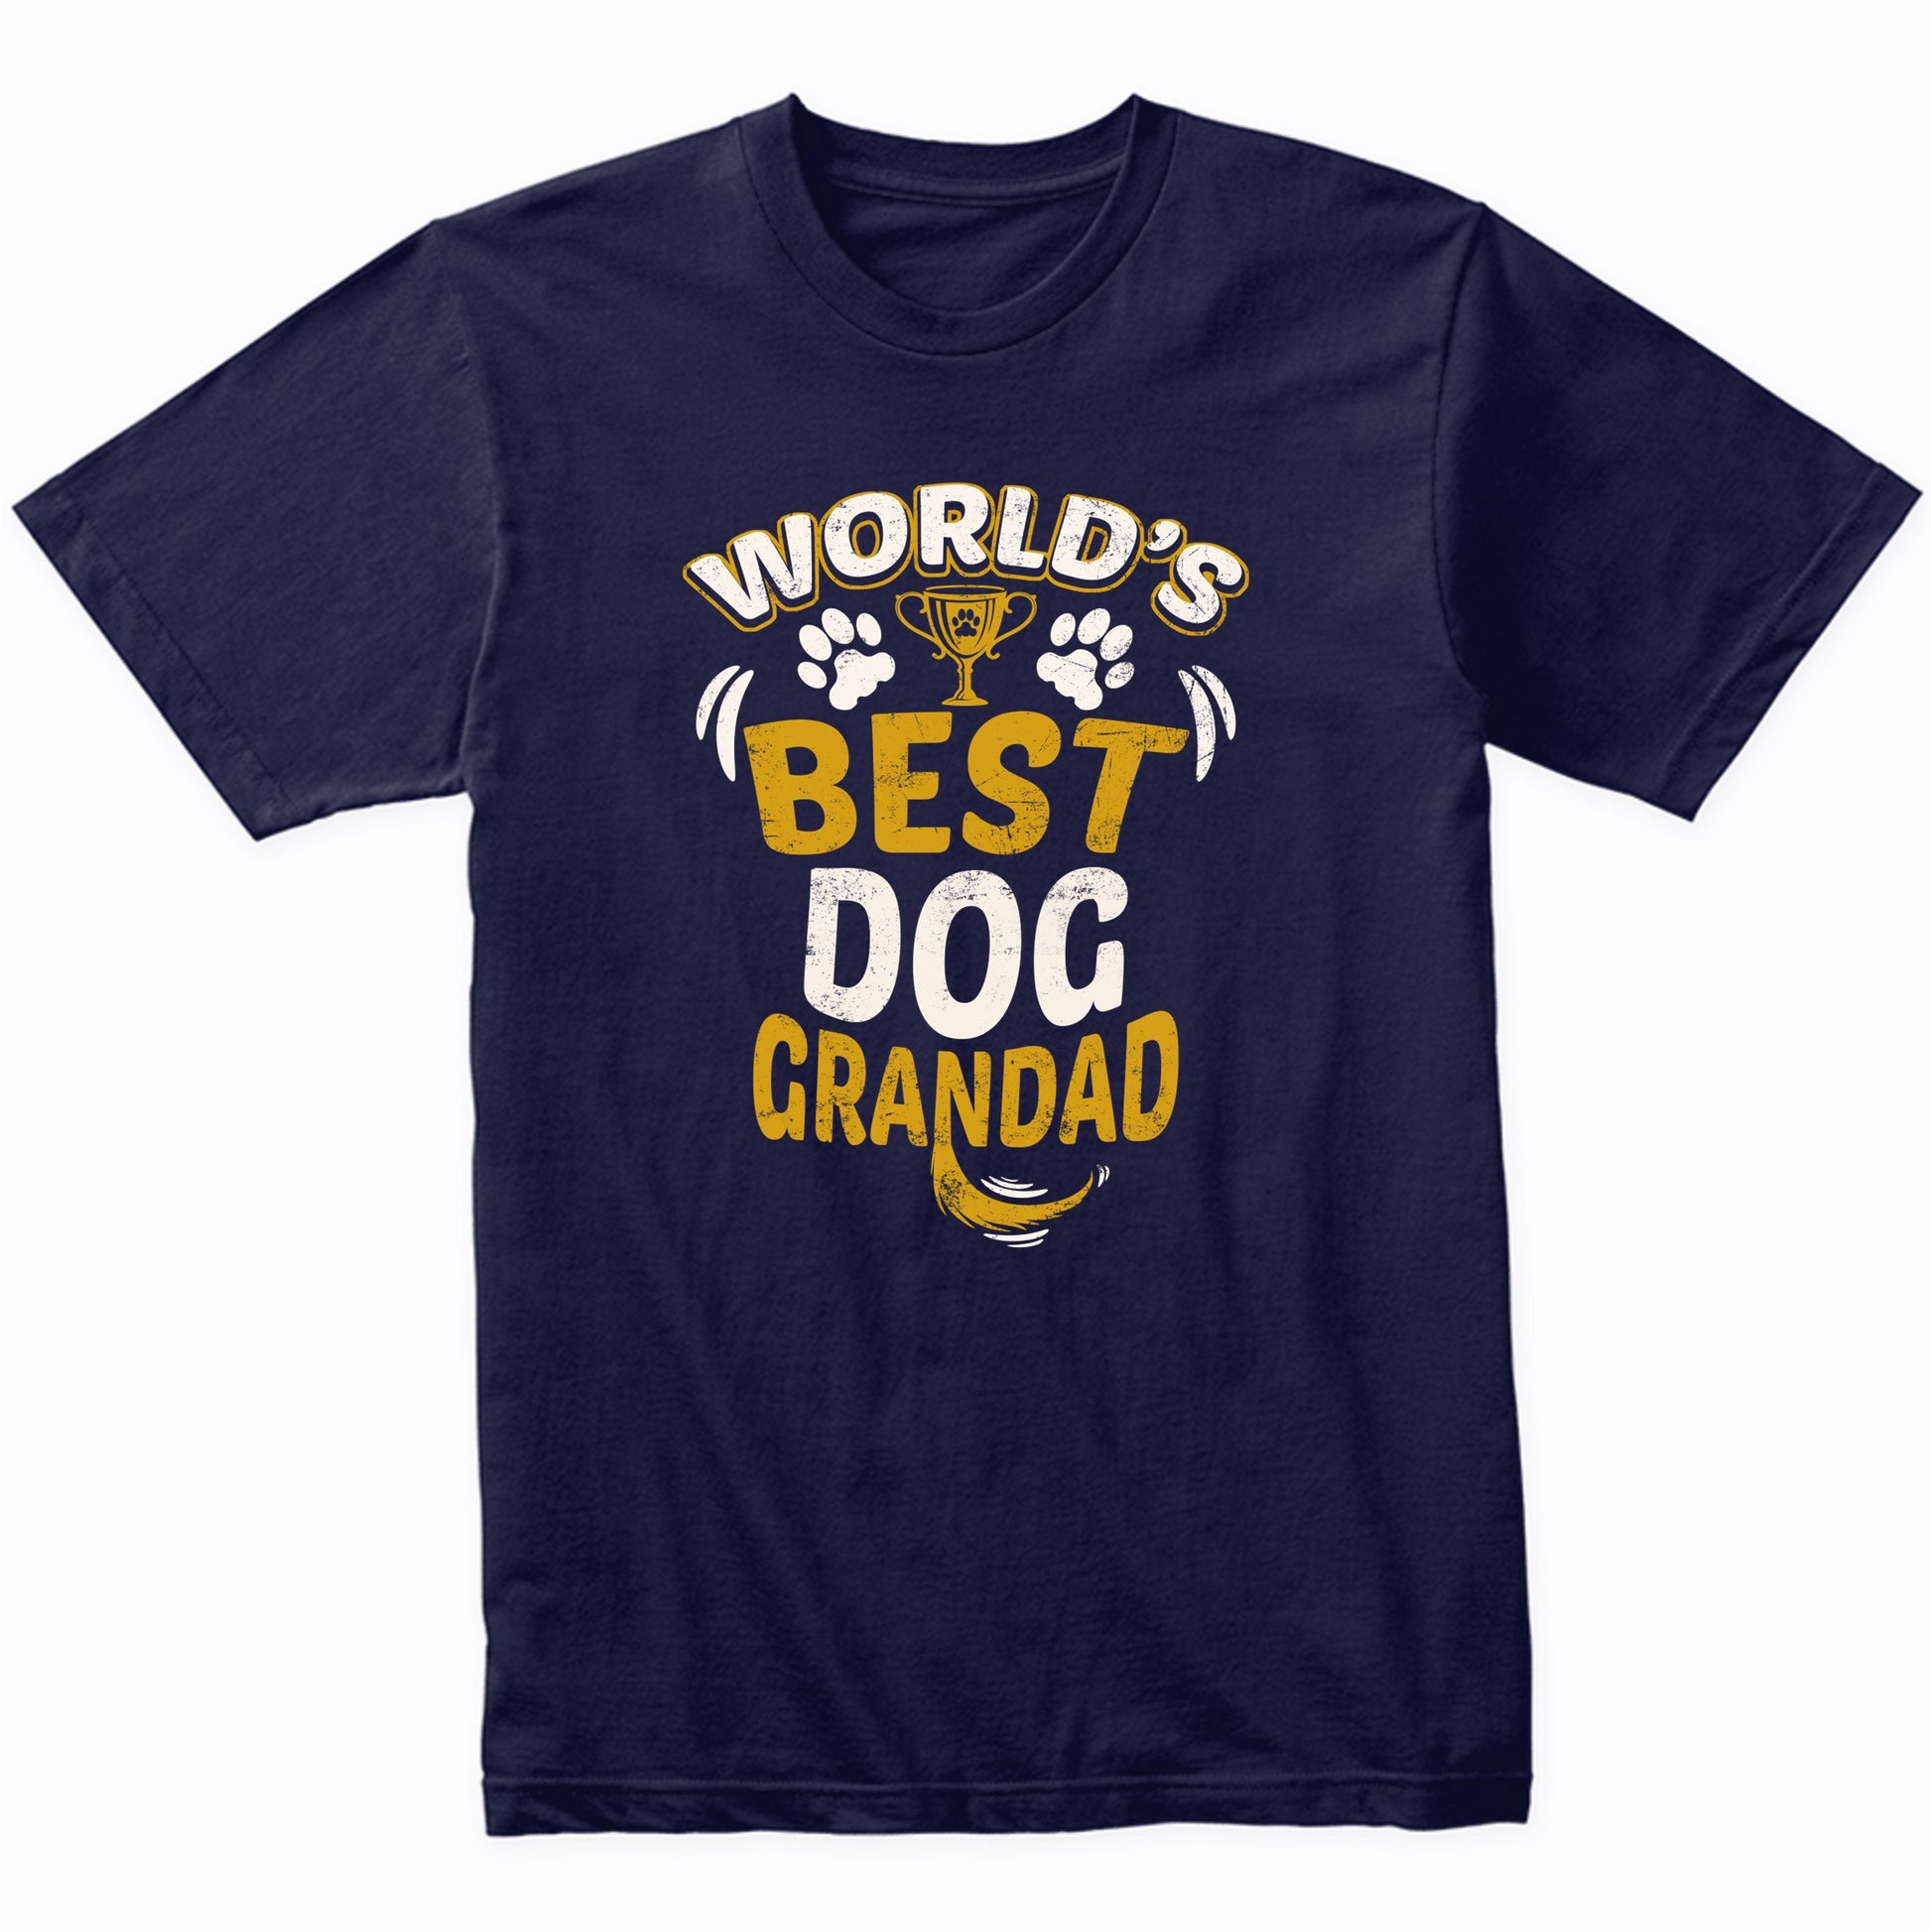 World's Best Dog Grandad Graphic T-Shirt